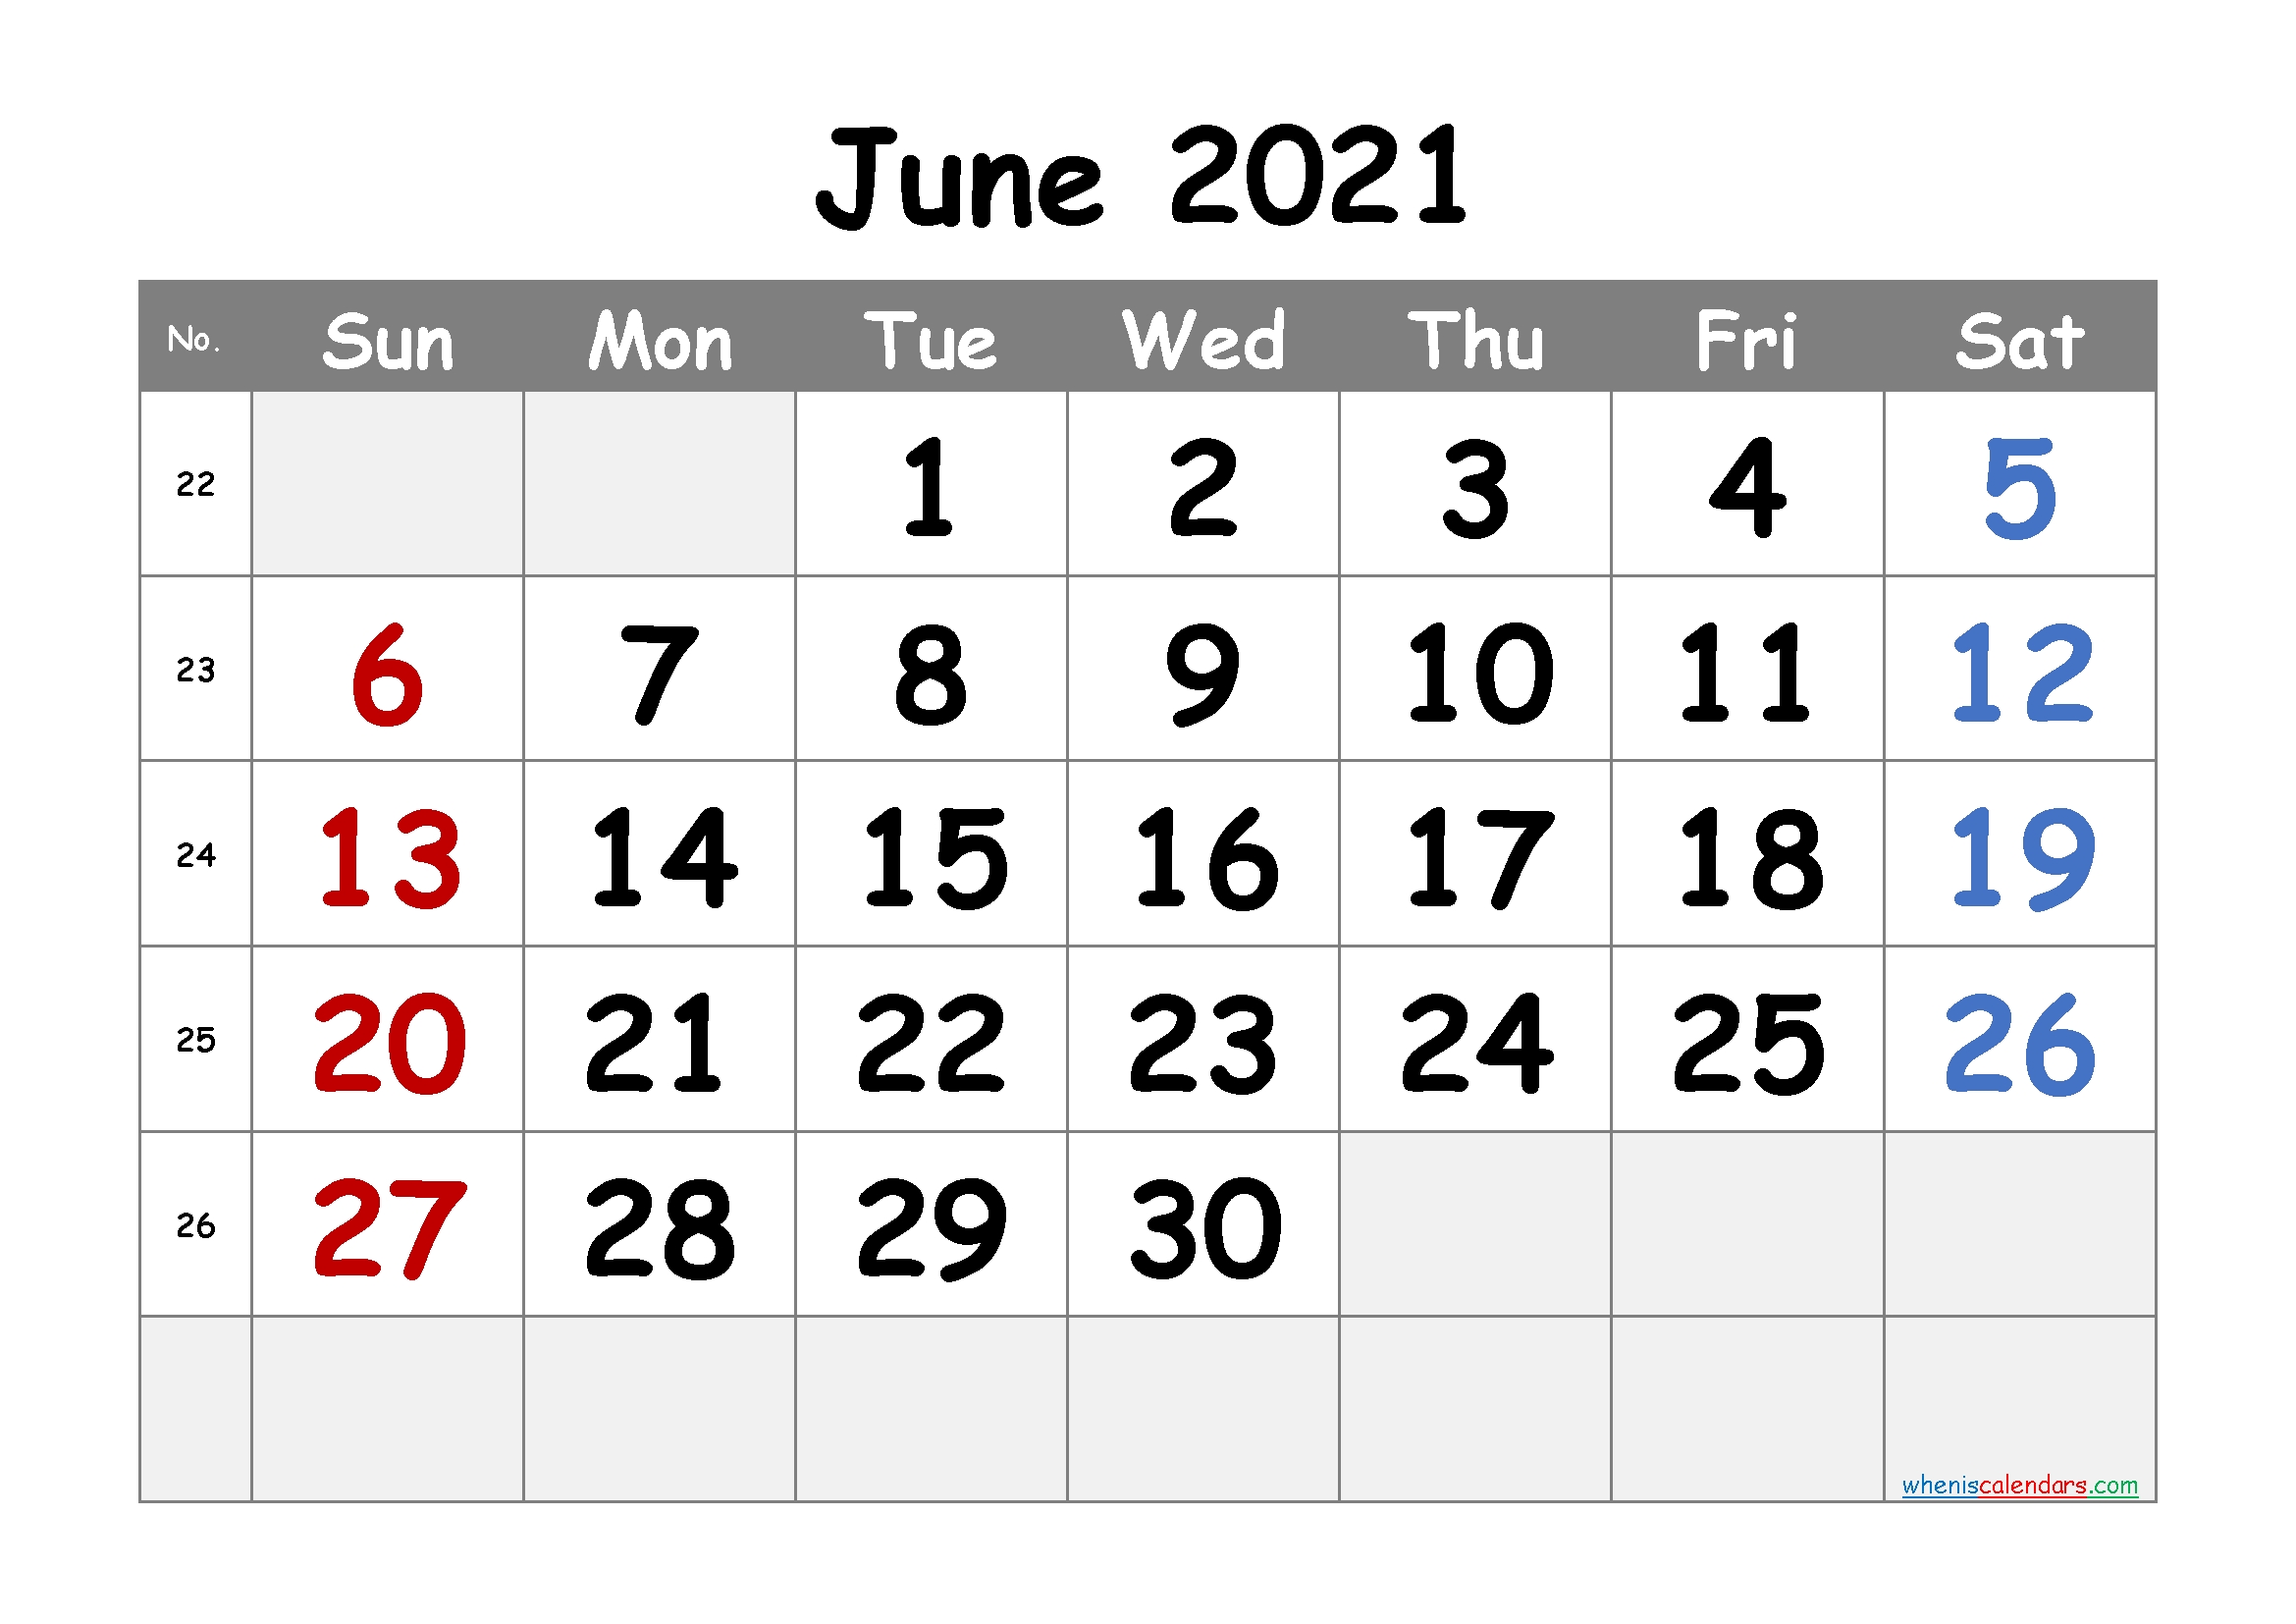 Free Printable 2021 Monthly Calendar With Week Numbers Www.wiki-Calendar.com June 2021